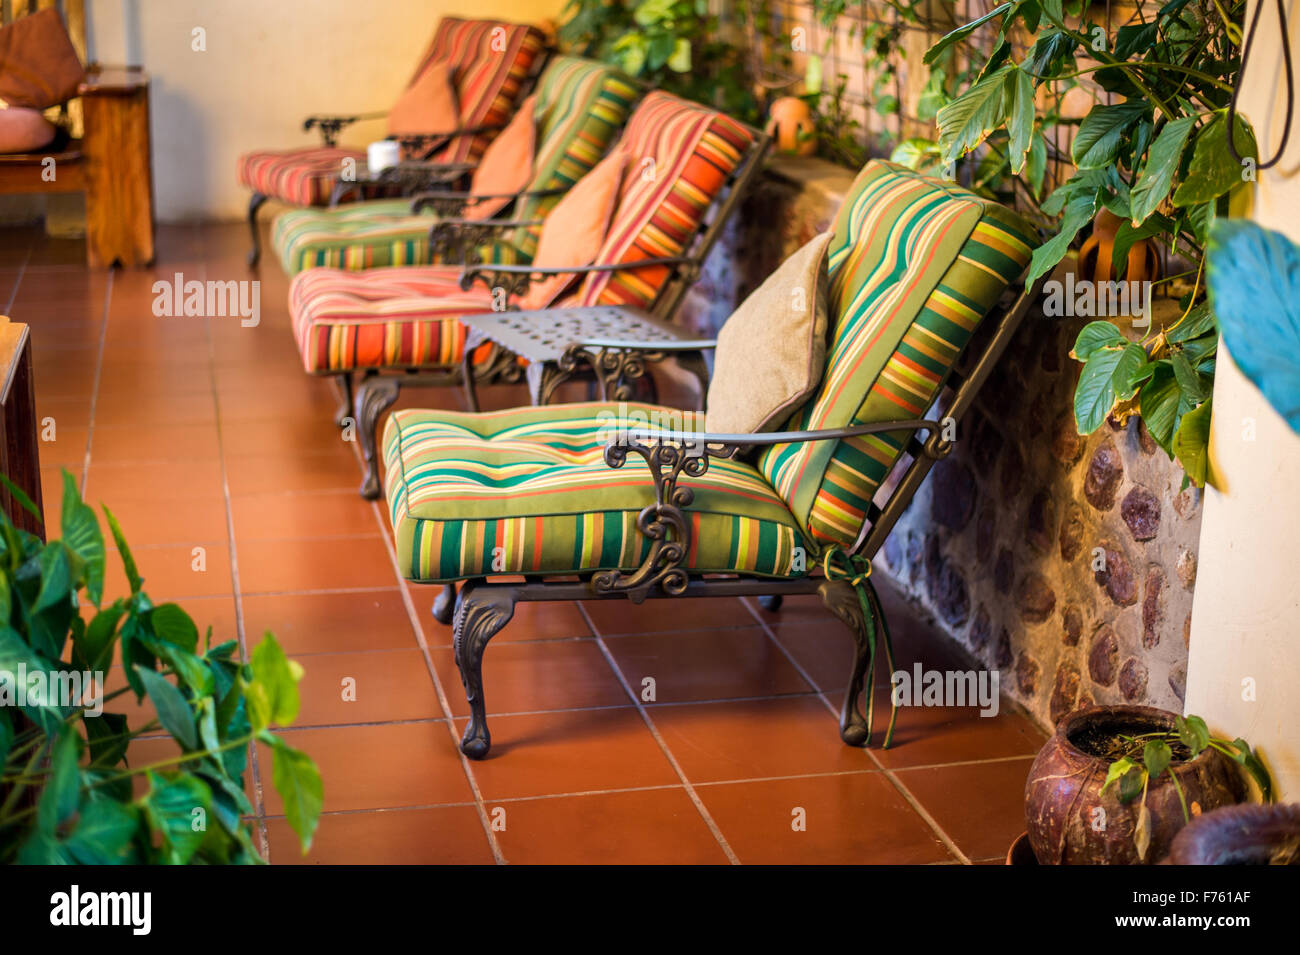 Kasane, Botswana - Chobe National Park Lounge Chairs at African Resort Lodge Stock Photo